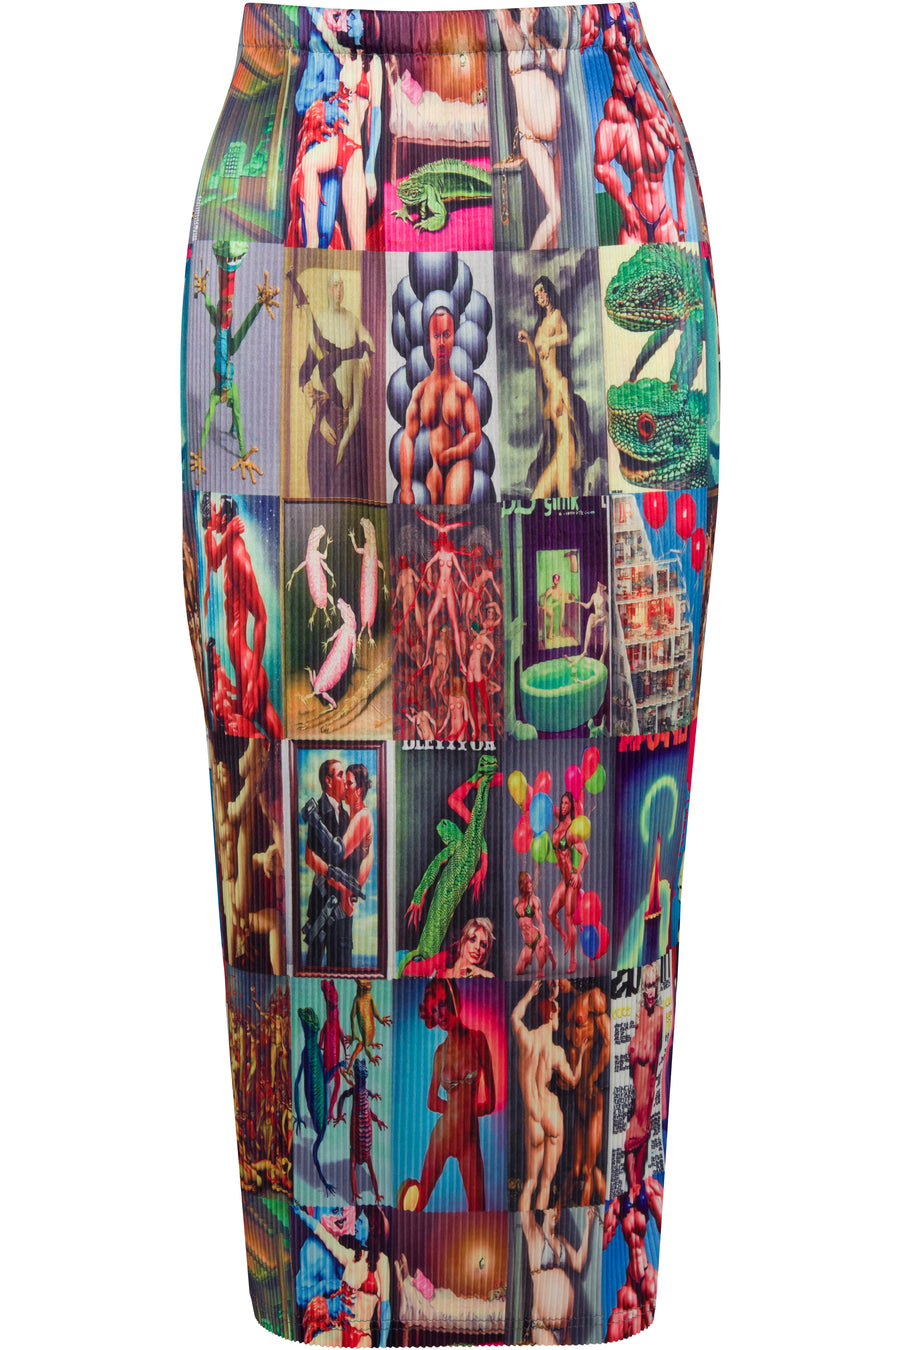 AI Collage Accordian Skirt